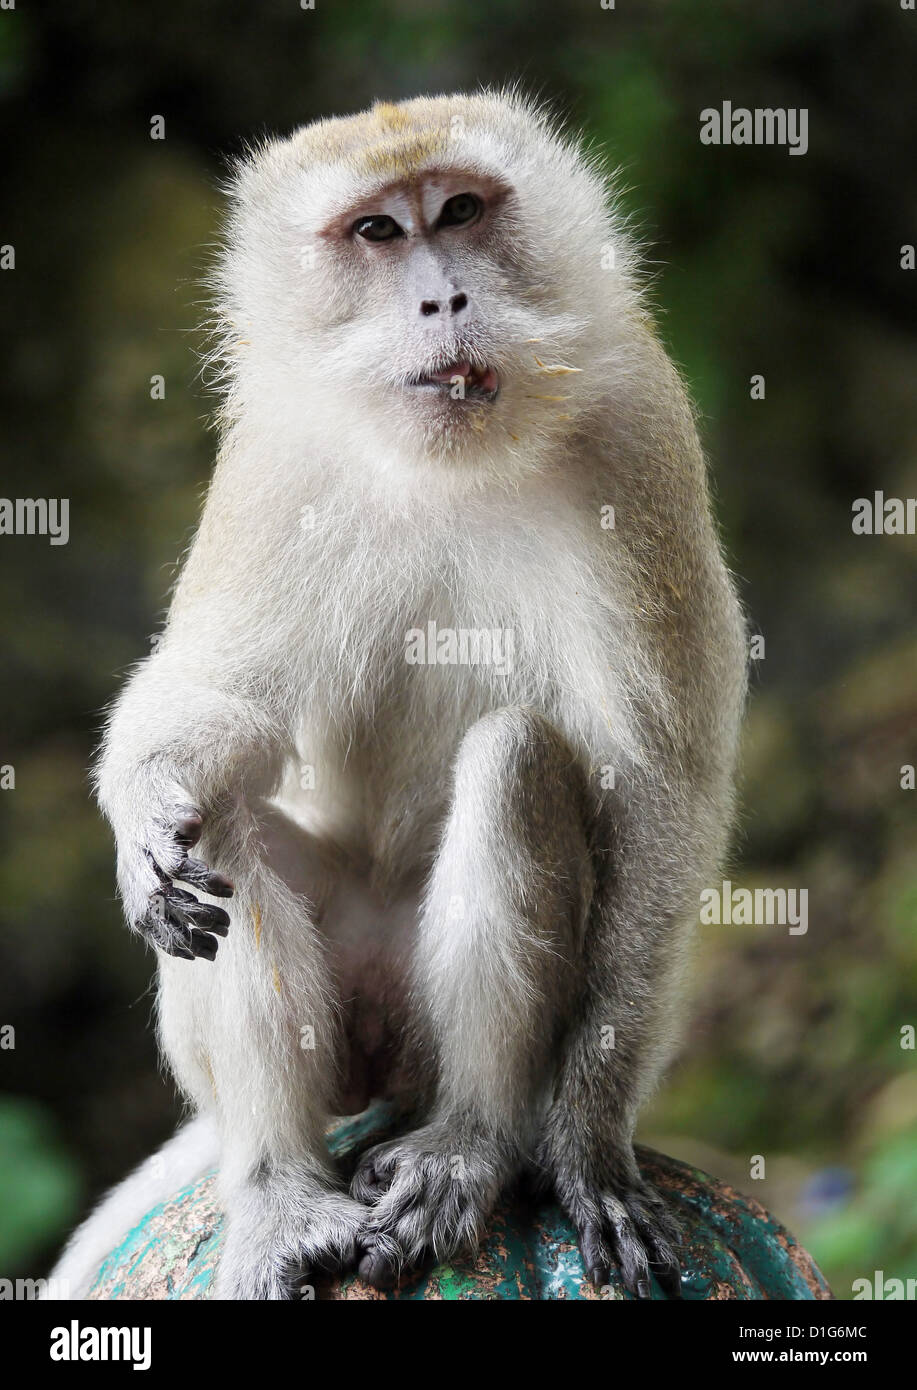 A Portrait of a Monkey Stock Photo